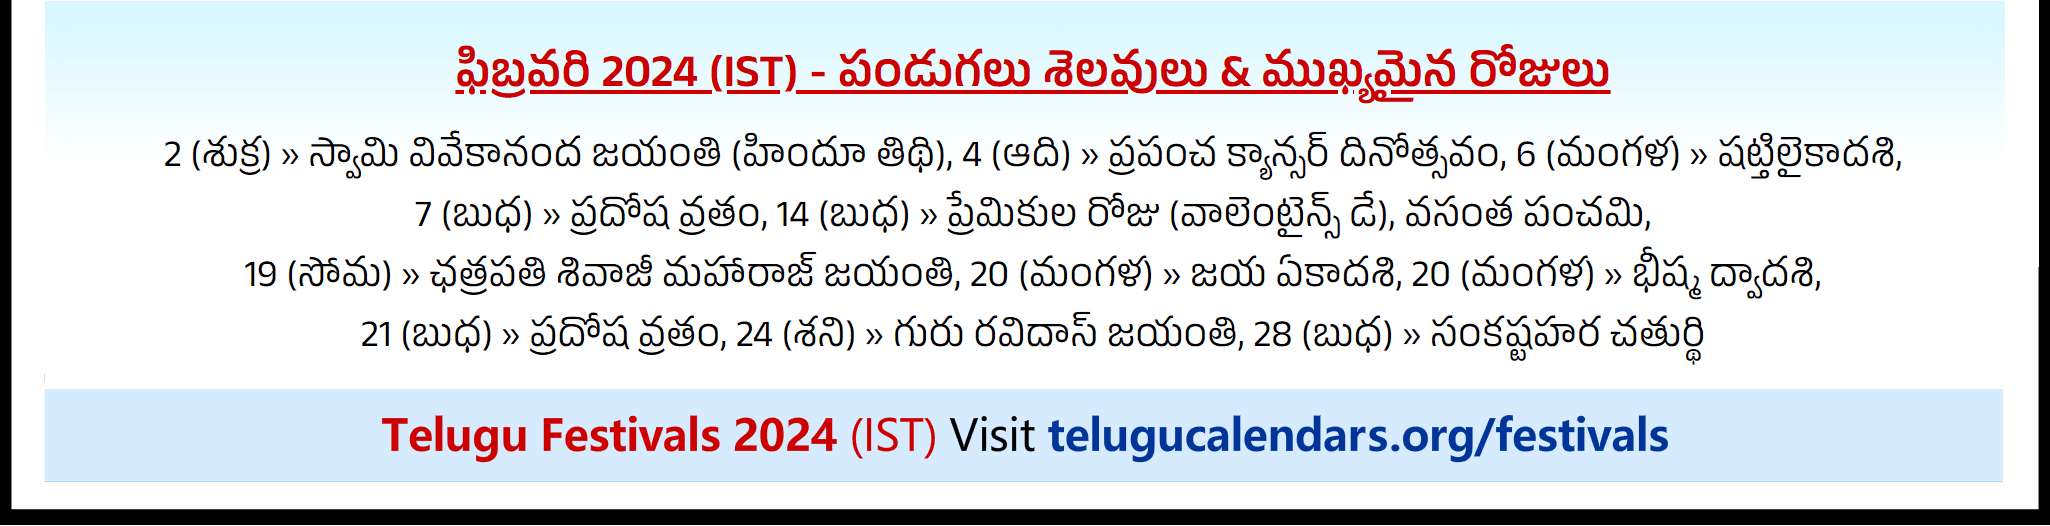 Telugu Festivals 2024 February Toronto